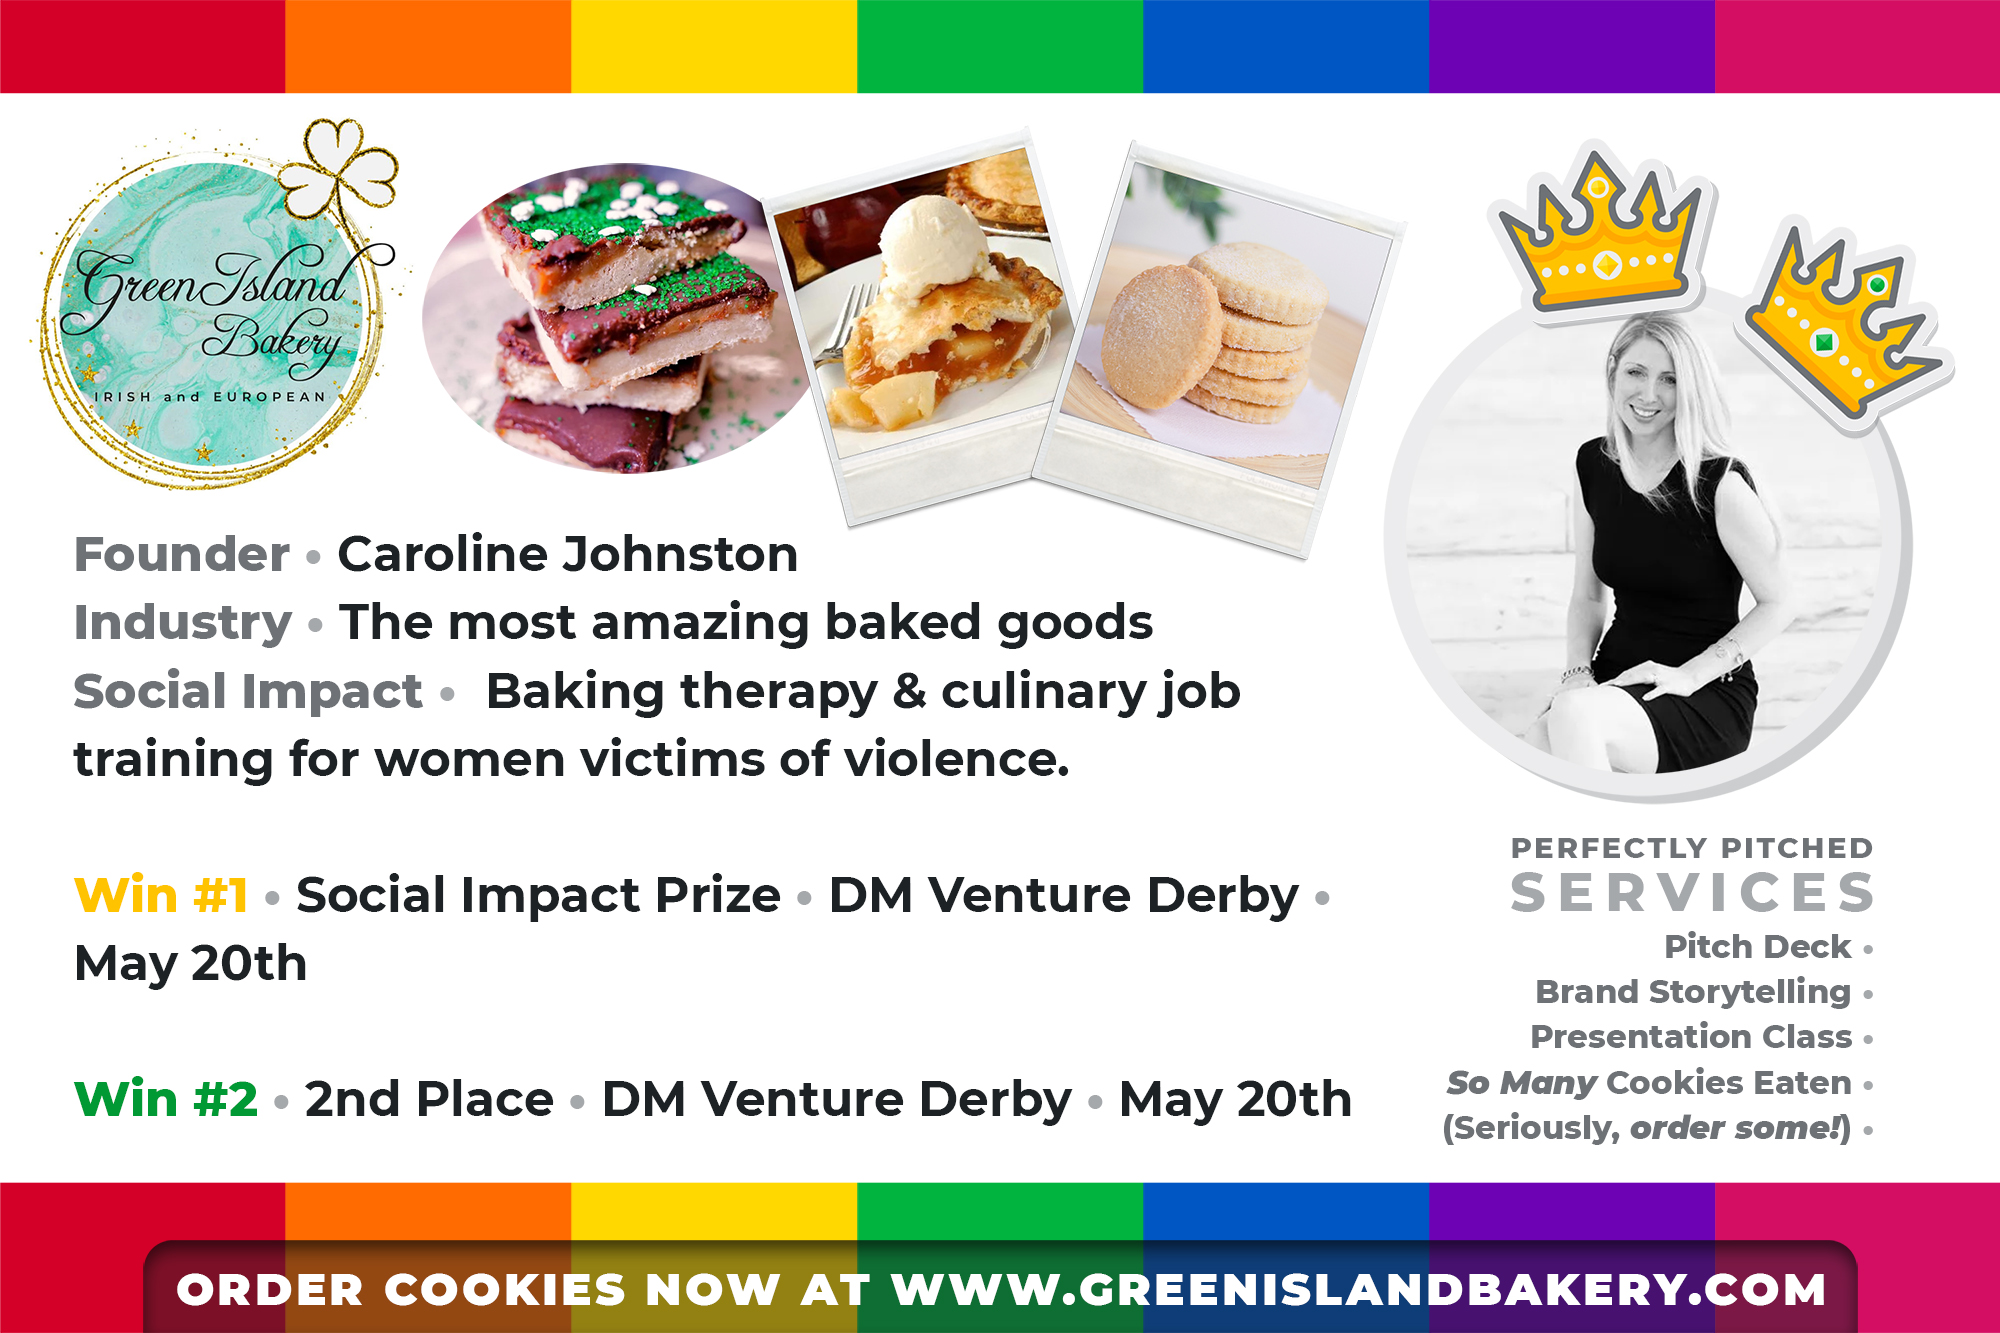 An image highlighting Caroline Johnston and her venture, Green Island Bakery!